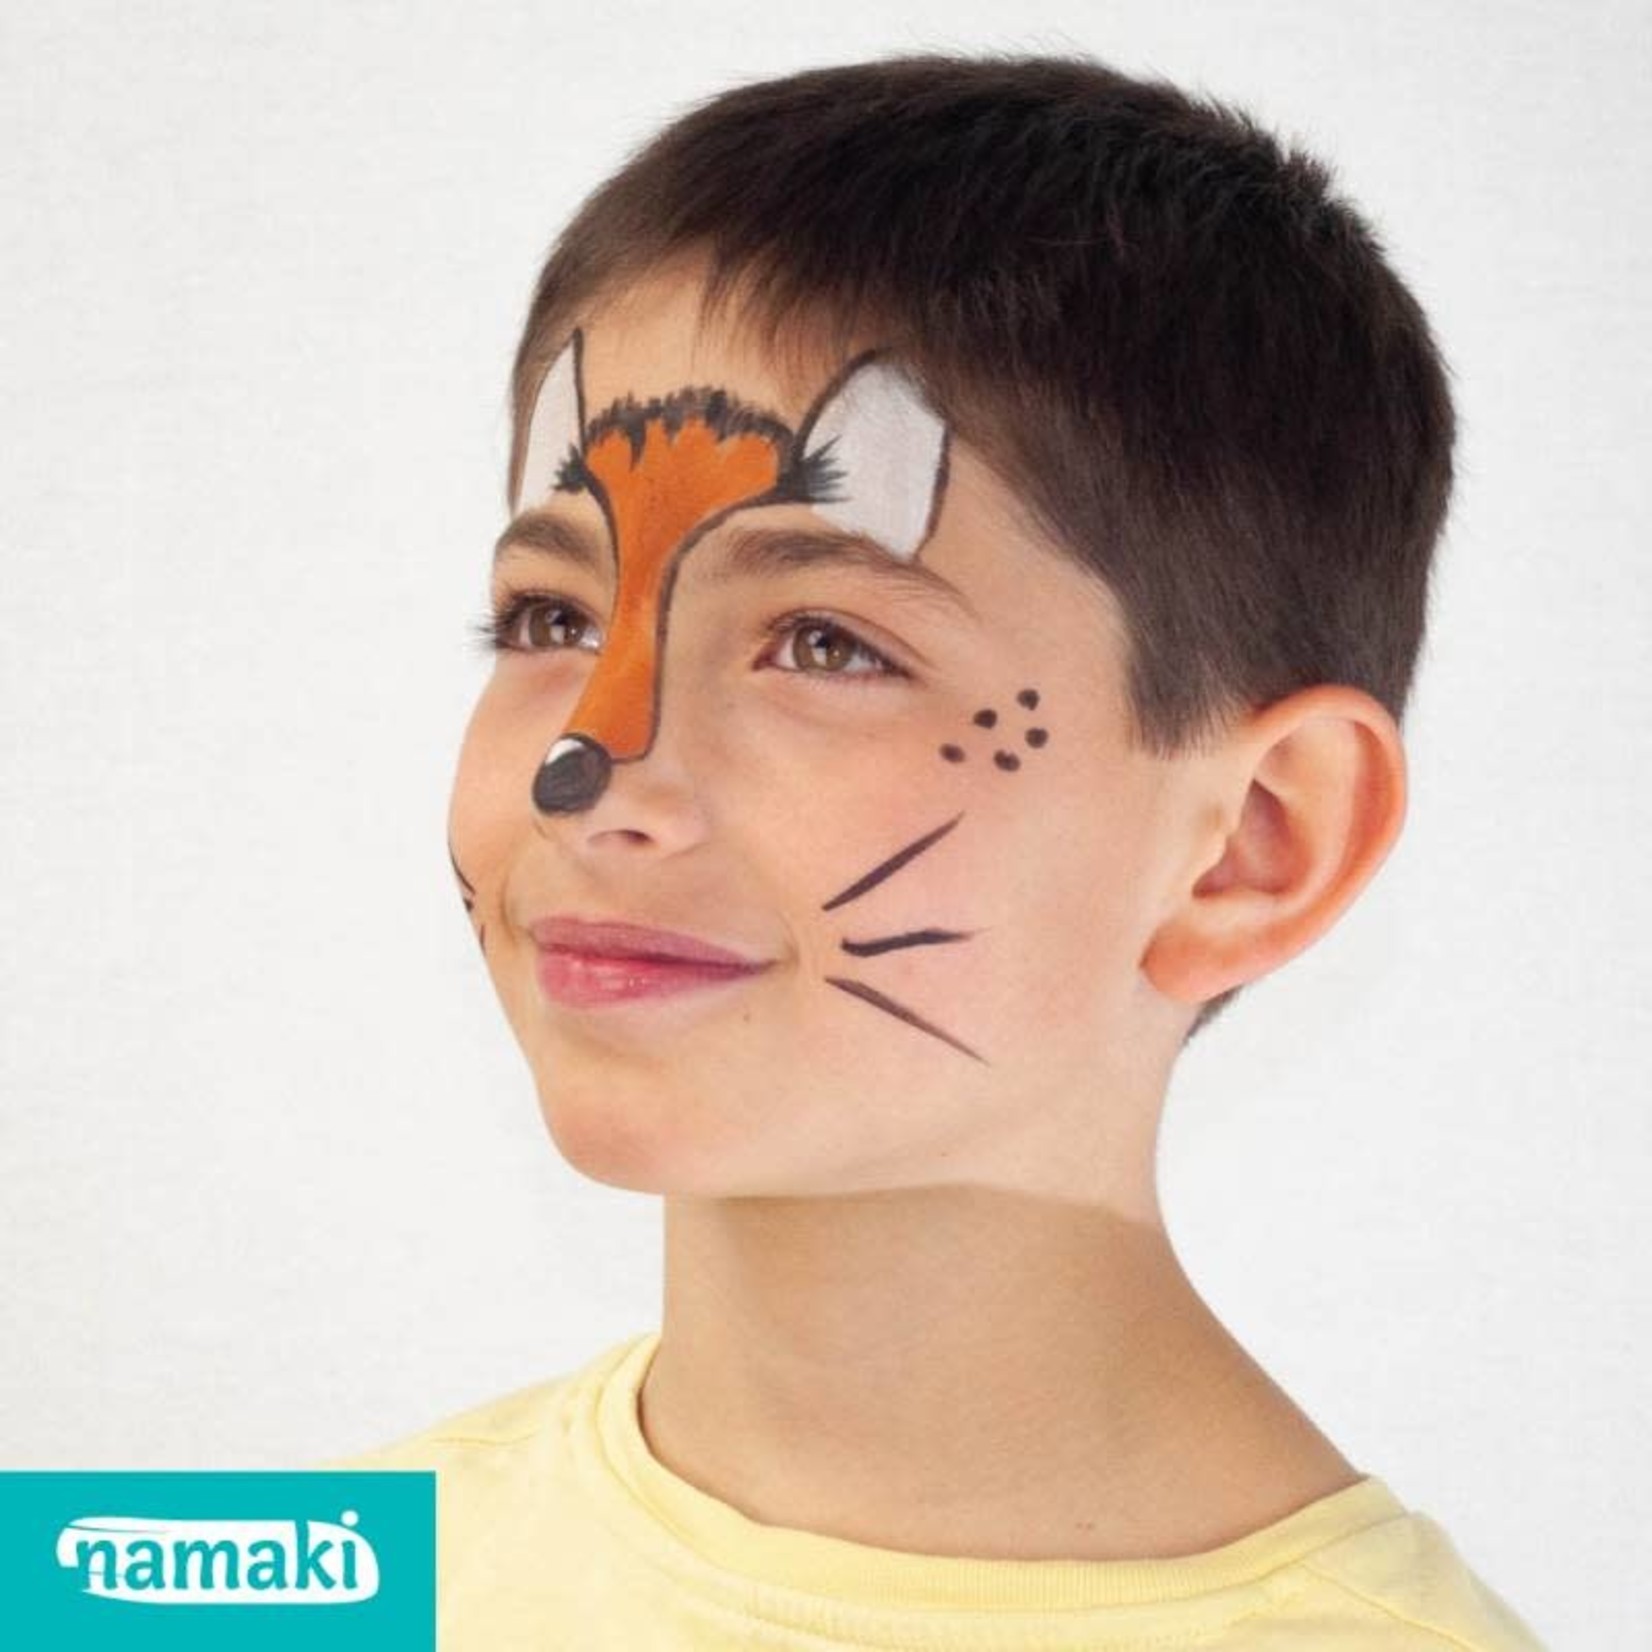 Namaki Namaki – maquillage – tigre et renard